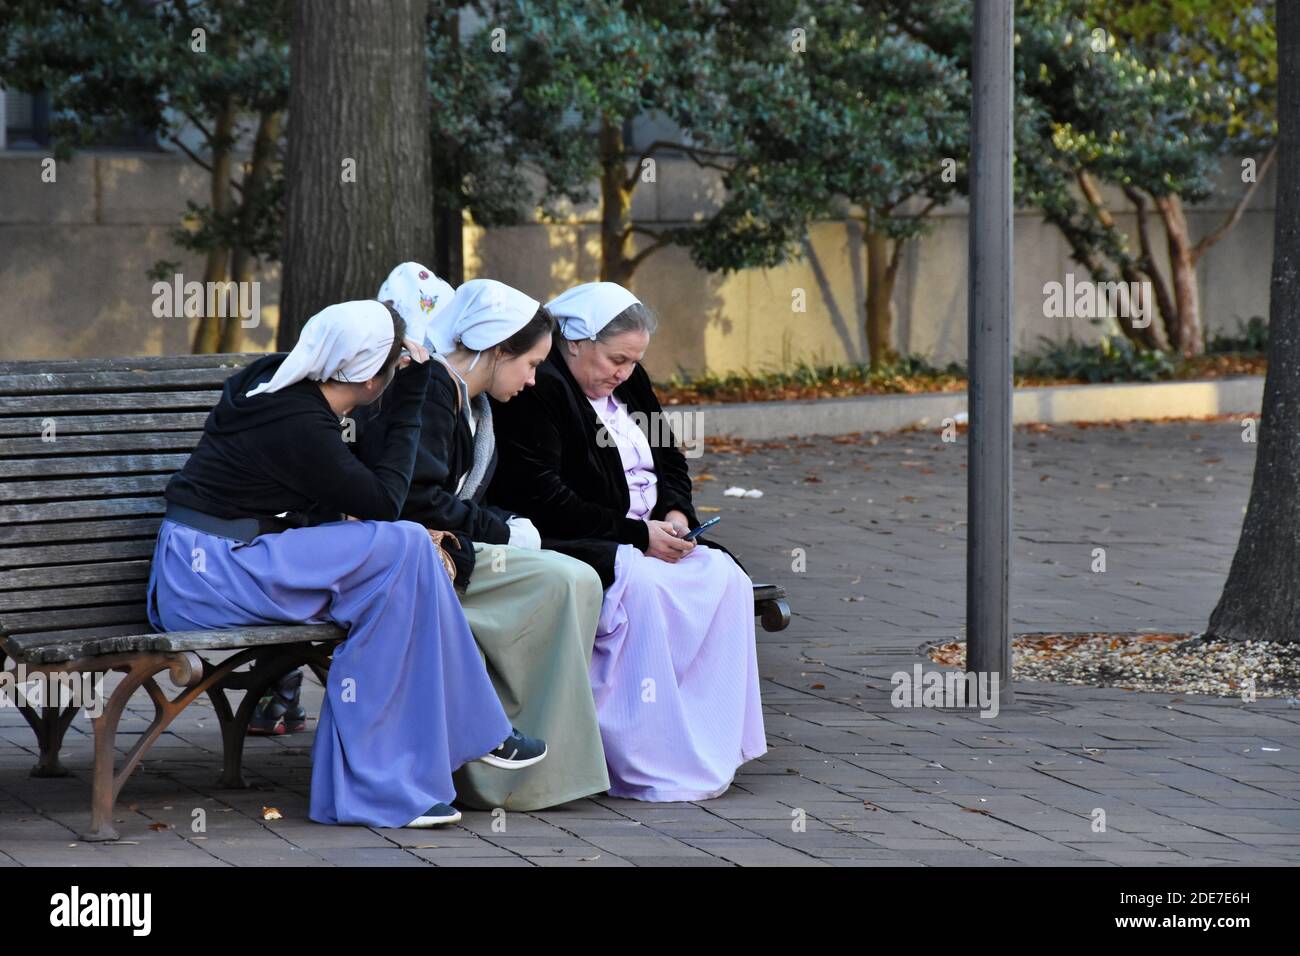 Washington DC. November 14, 2020. Million Maga March. Three Amish women sitting on the bench looking at the phone. Stock Photo